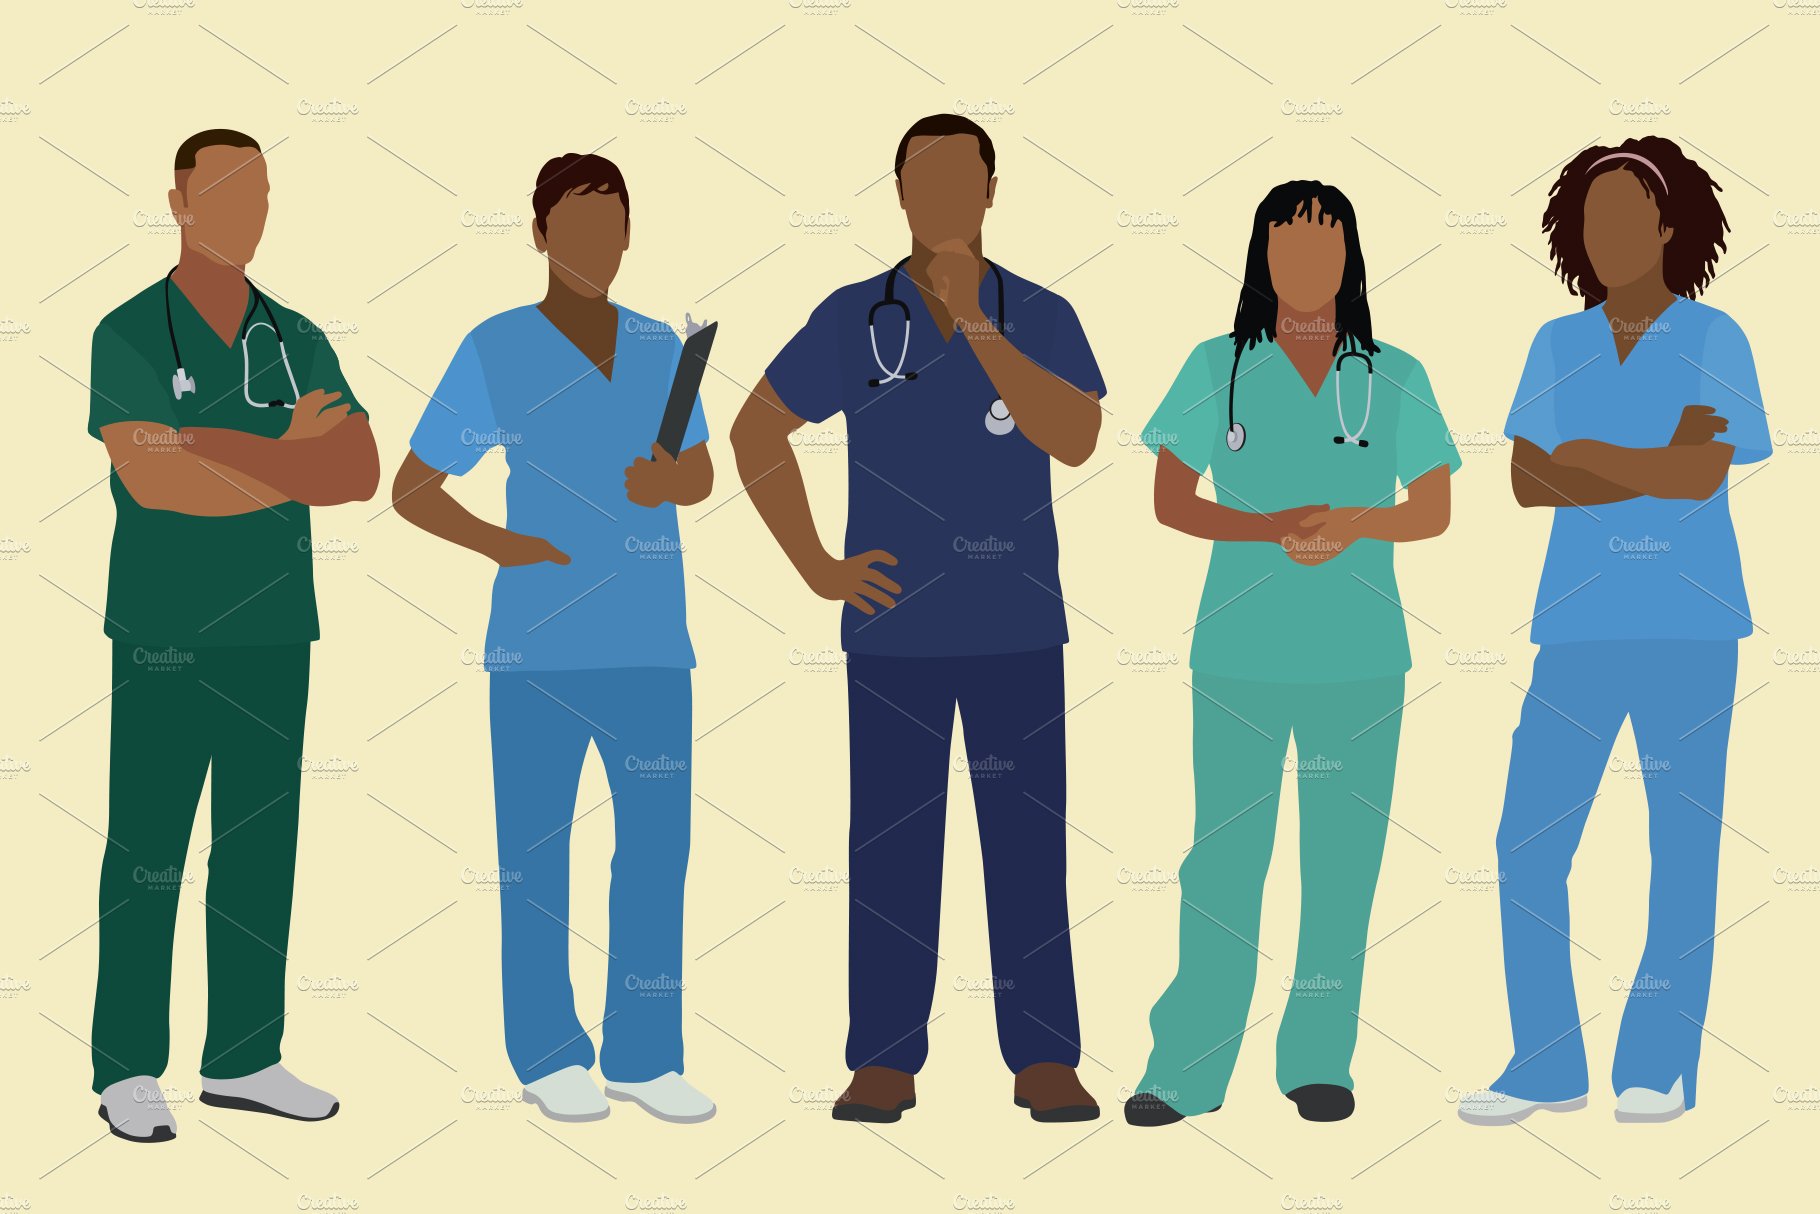 Black Doctors or Nurses cover image.